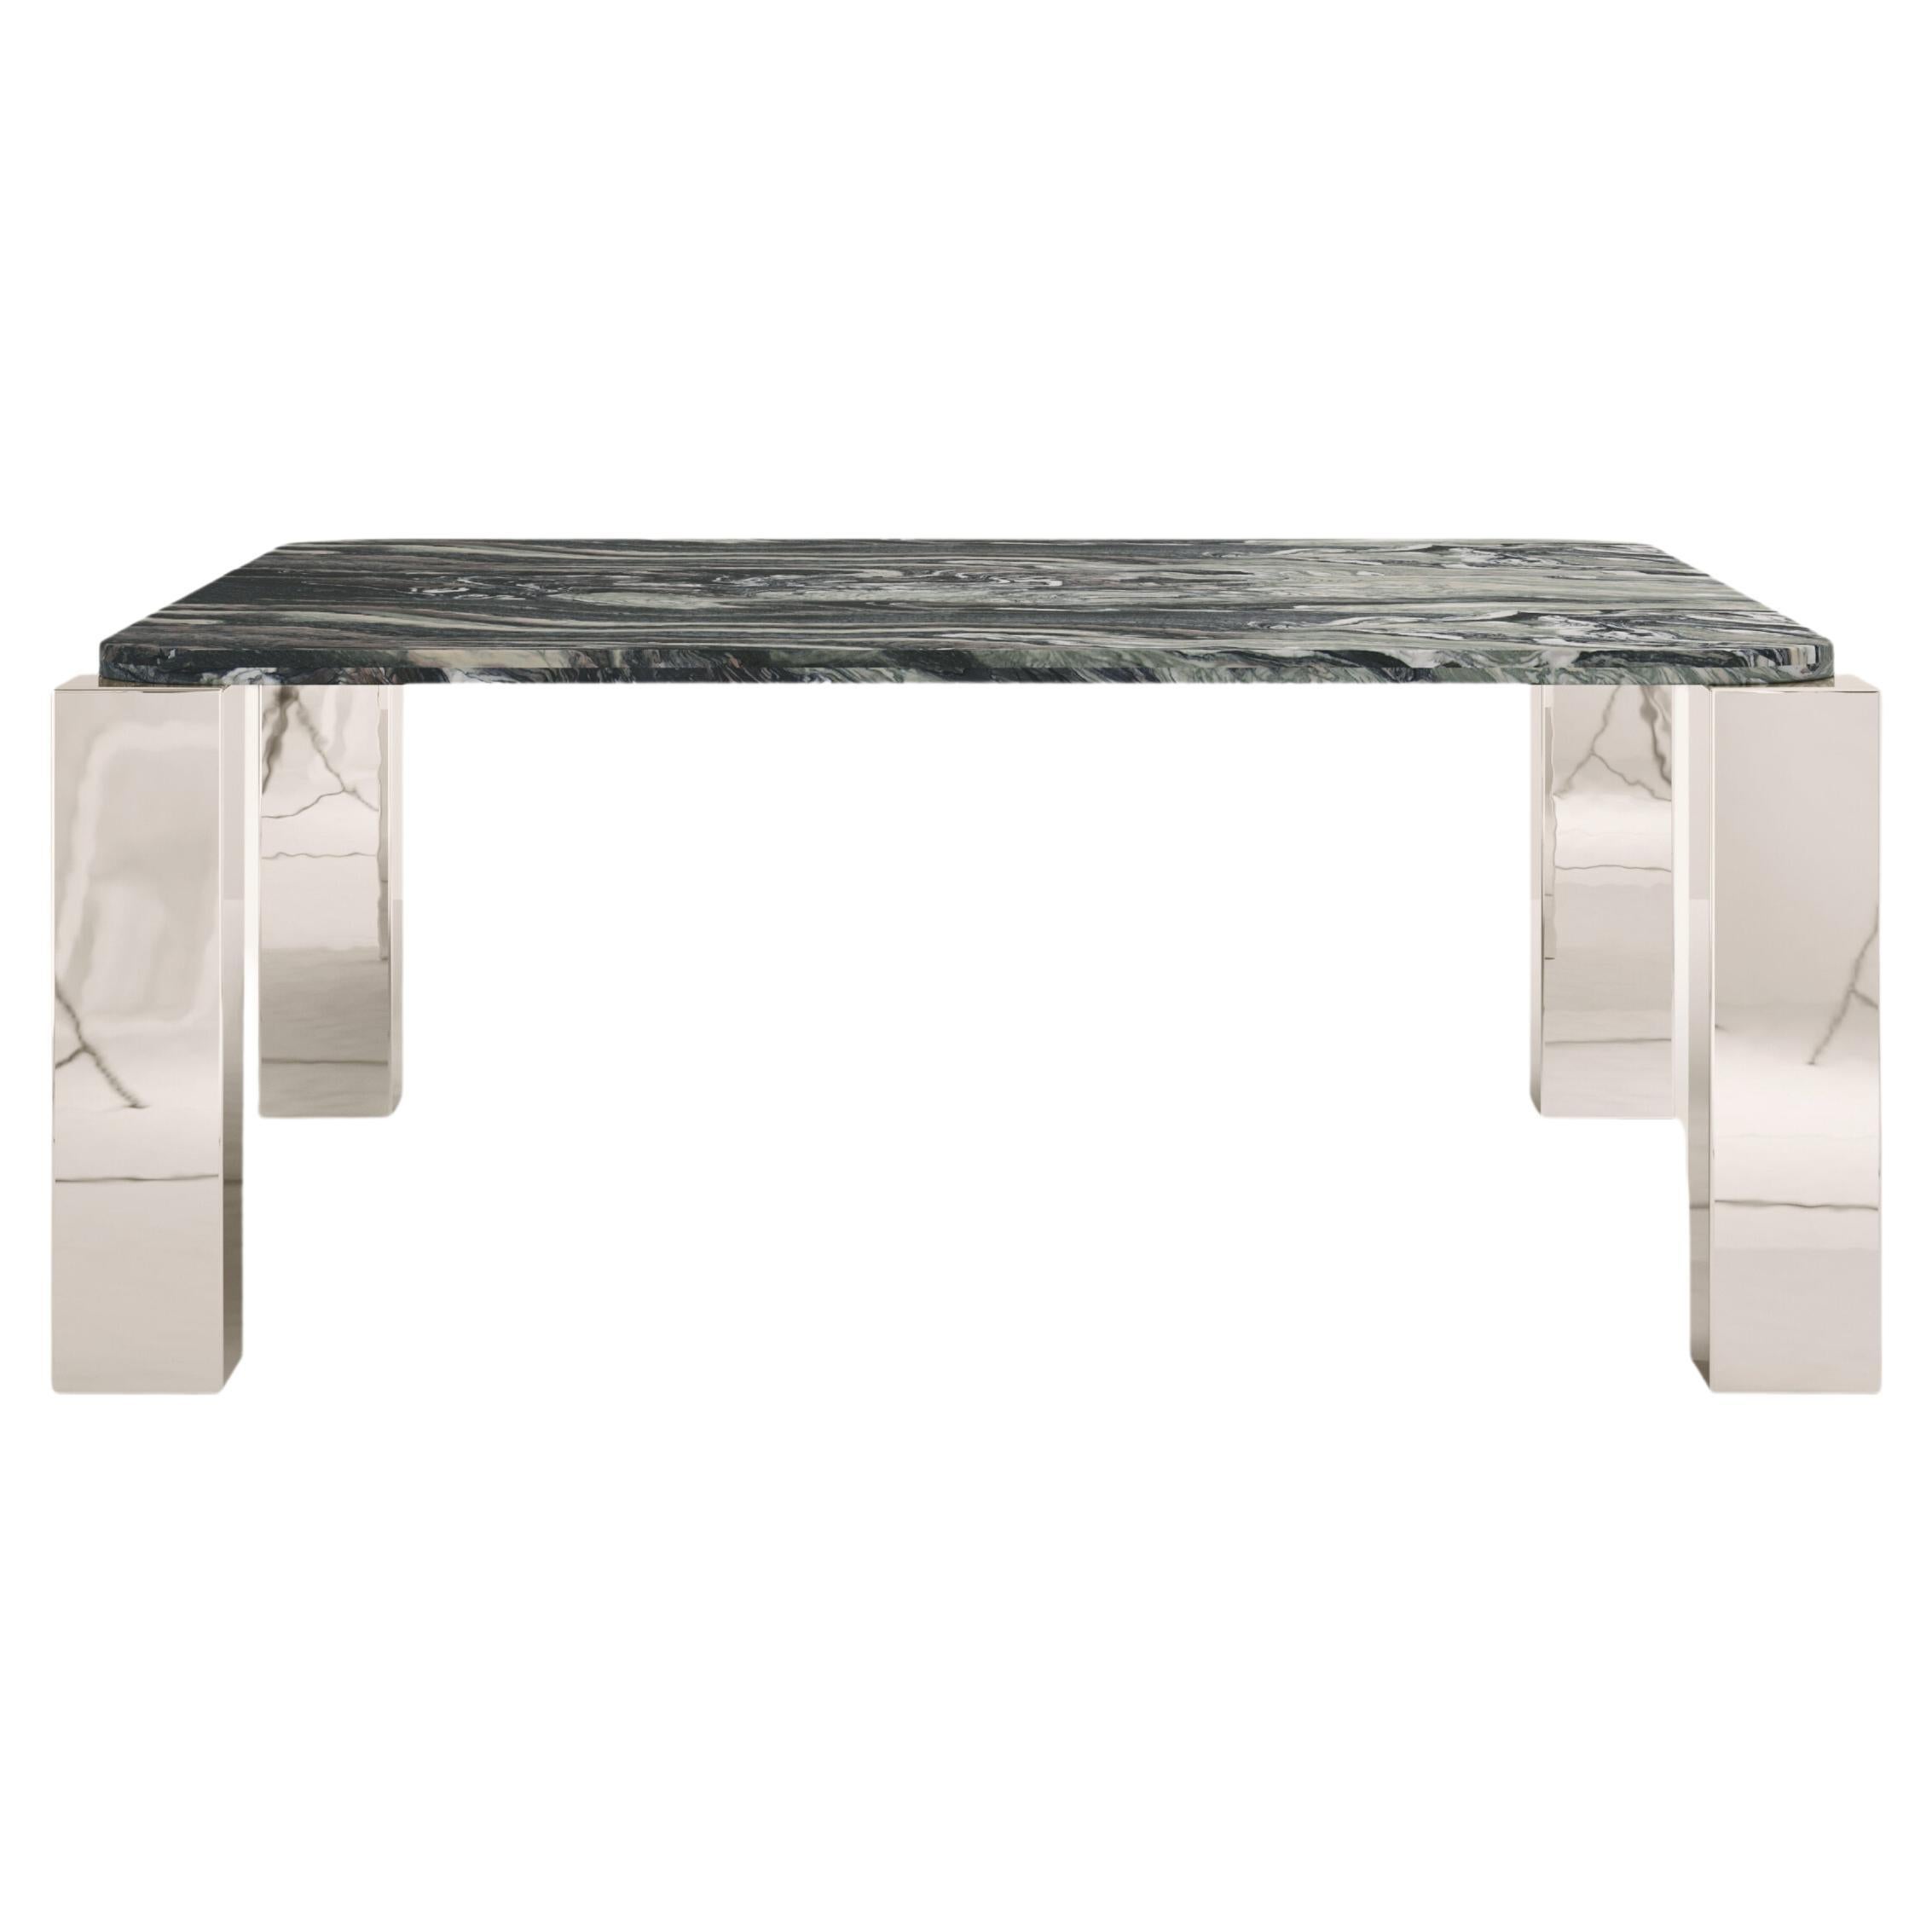 FORM(LA) Cubo Square Dining Table 74”L x 74”W x 30”H Ondulato Marble & Chrome 